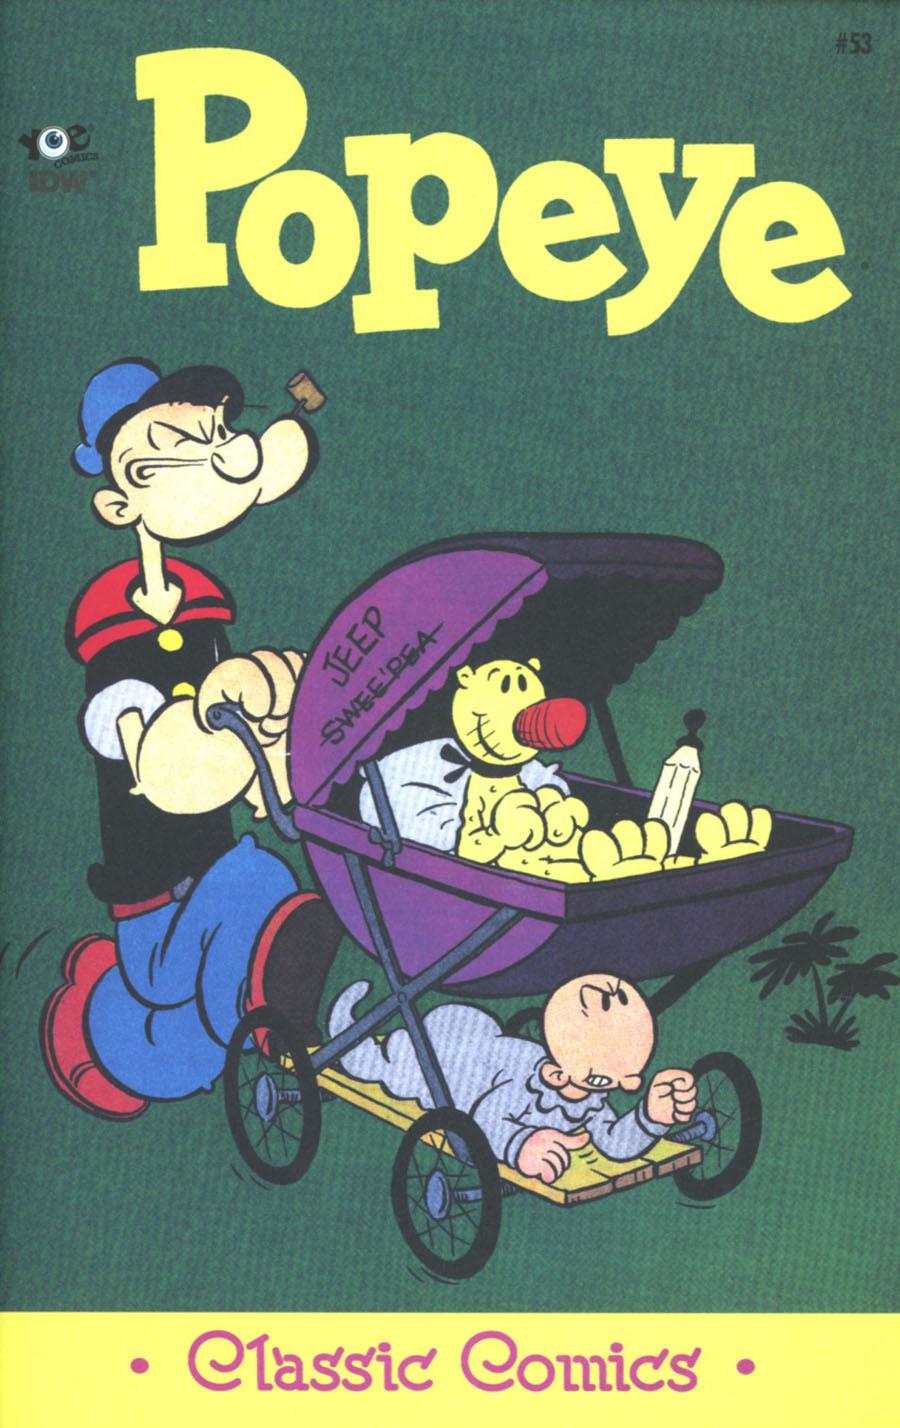 Classic Popeye Vol. 1 #53